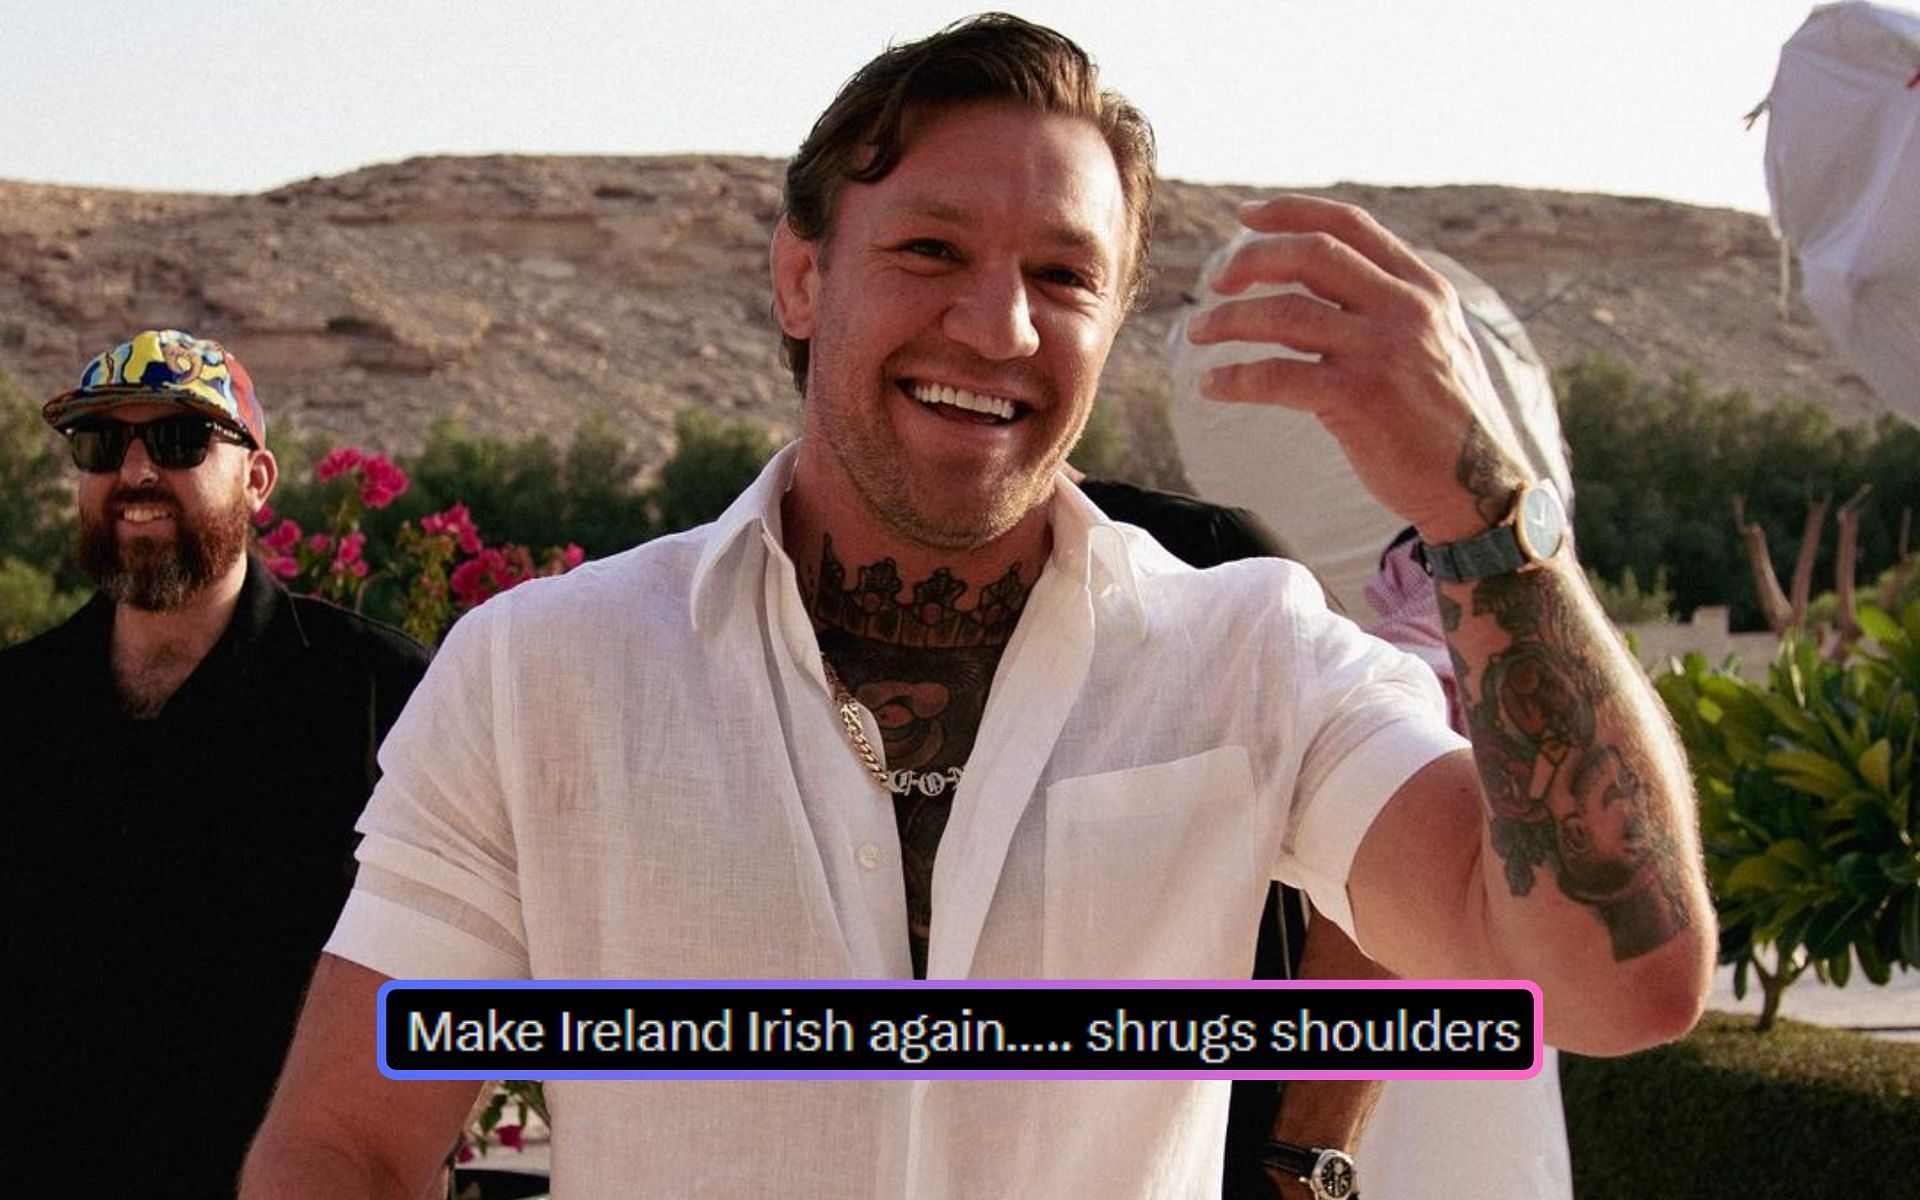 Conor McGregor succinctly responds to Ireland